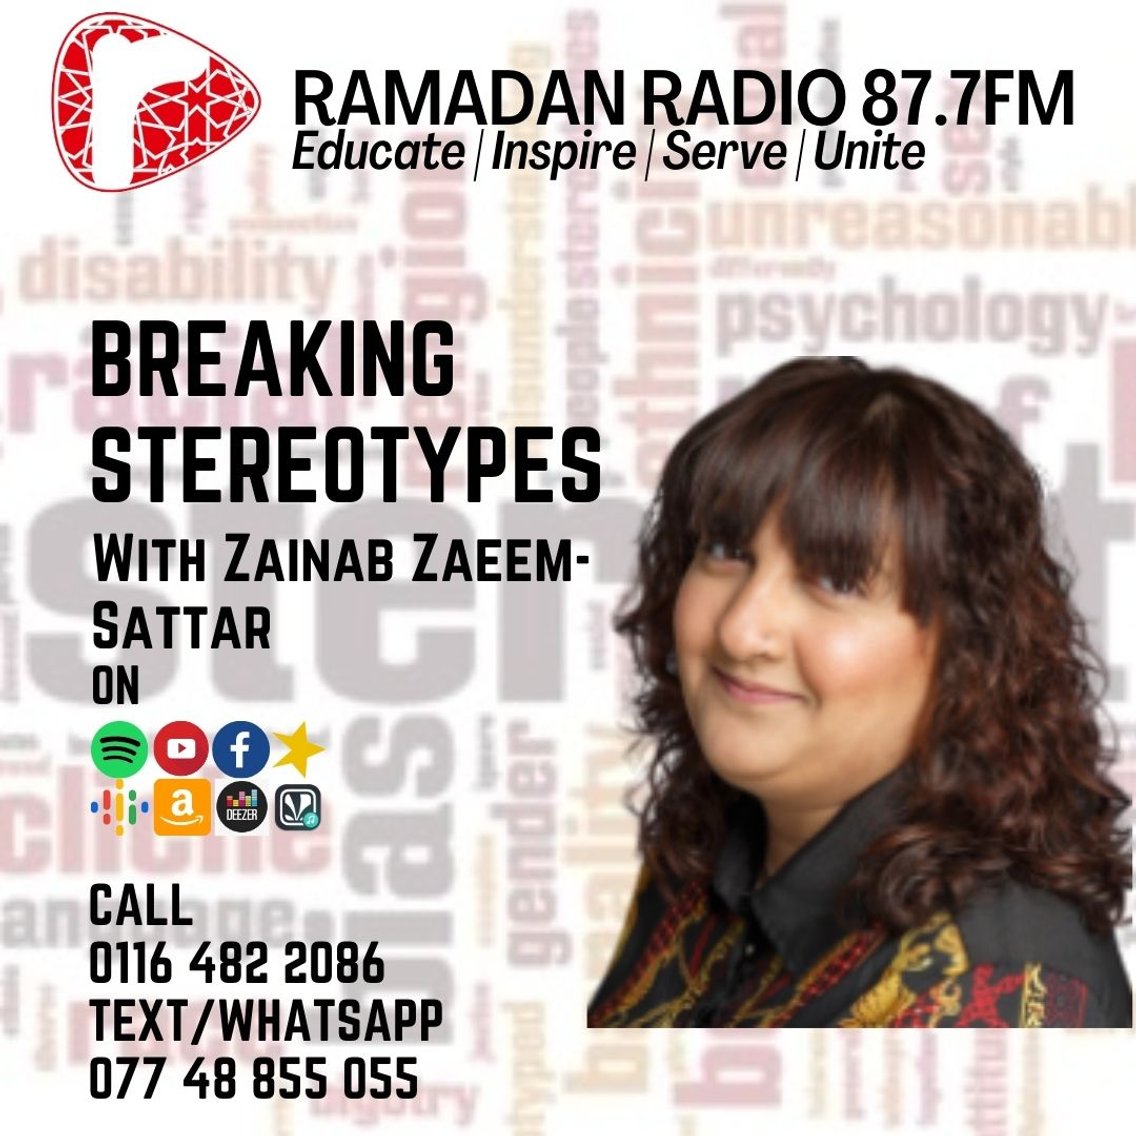 Ramadan FM - Breaking Stereotypes with Zainab Zaeem-Sattar - Cover Image